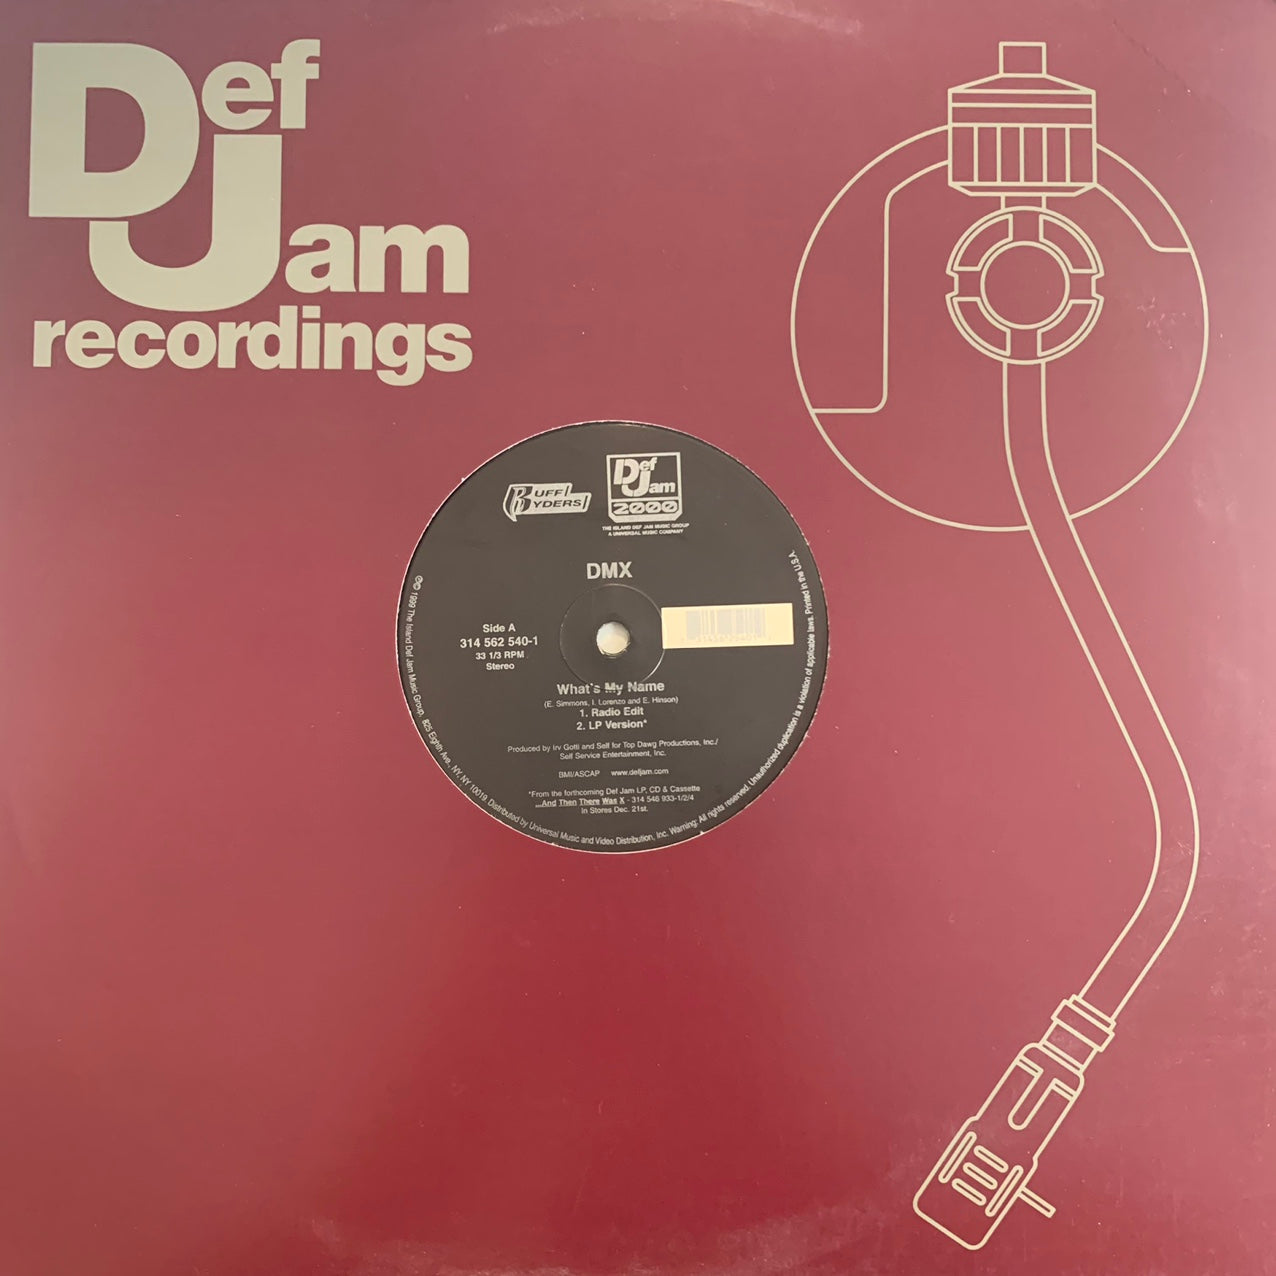 DMX “Whats My Name” 12inch Vinyl